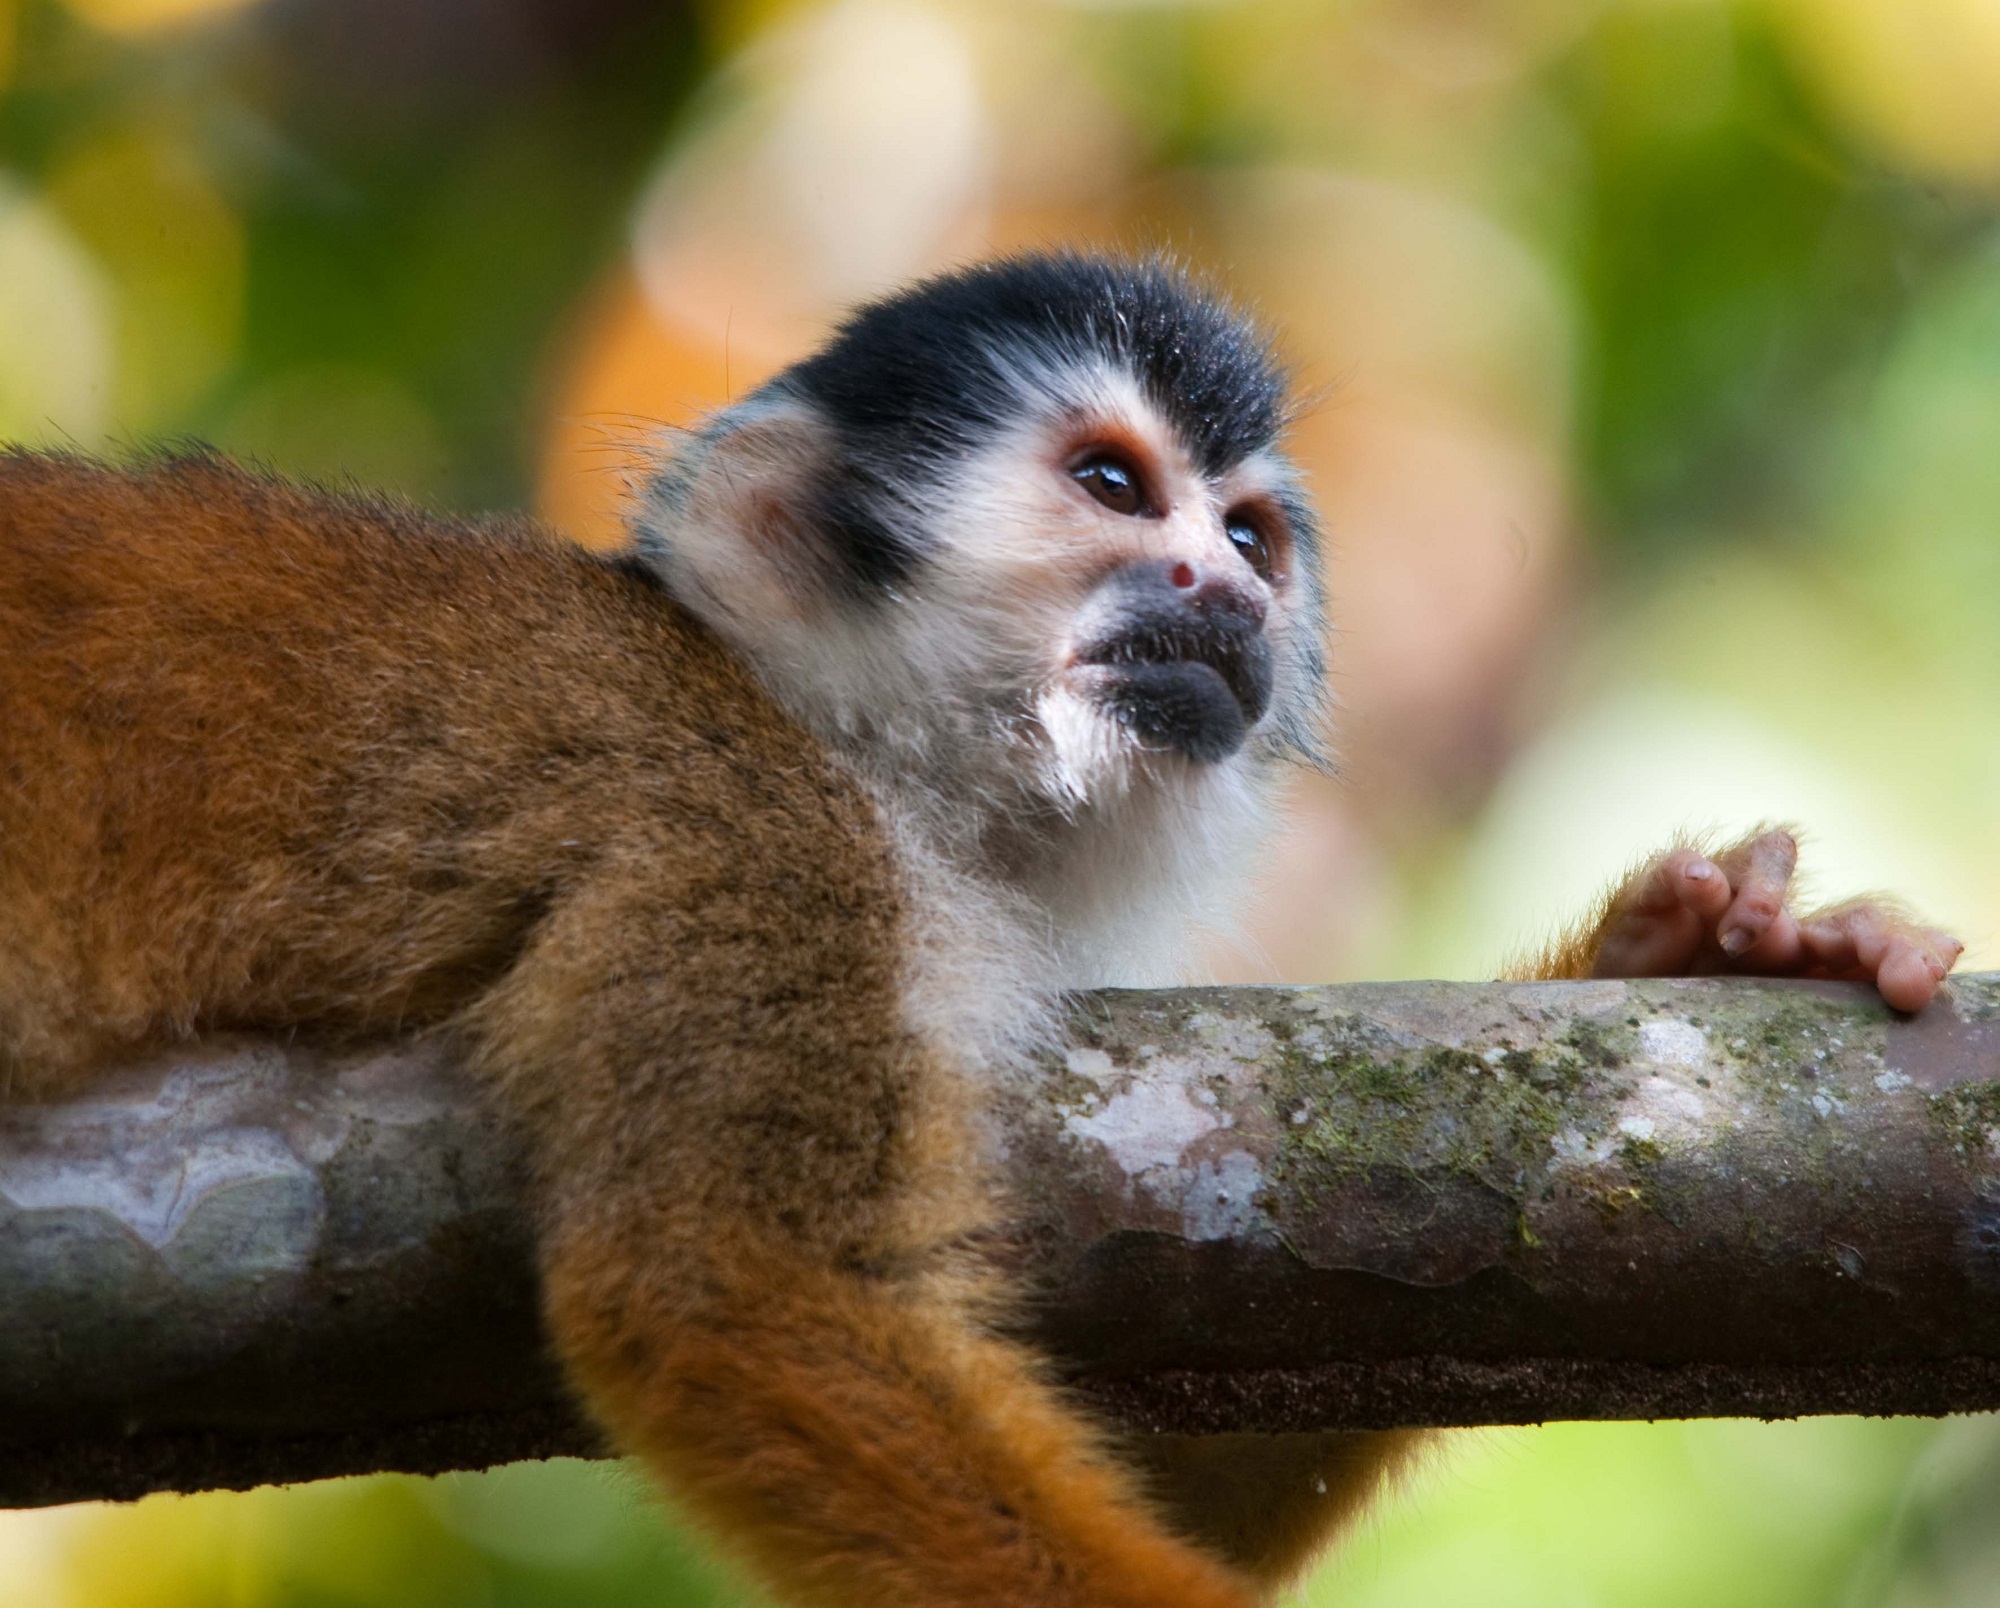 images of monkeys 2016